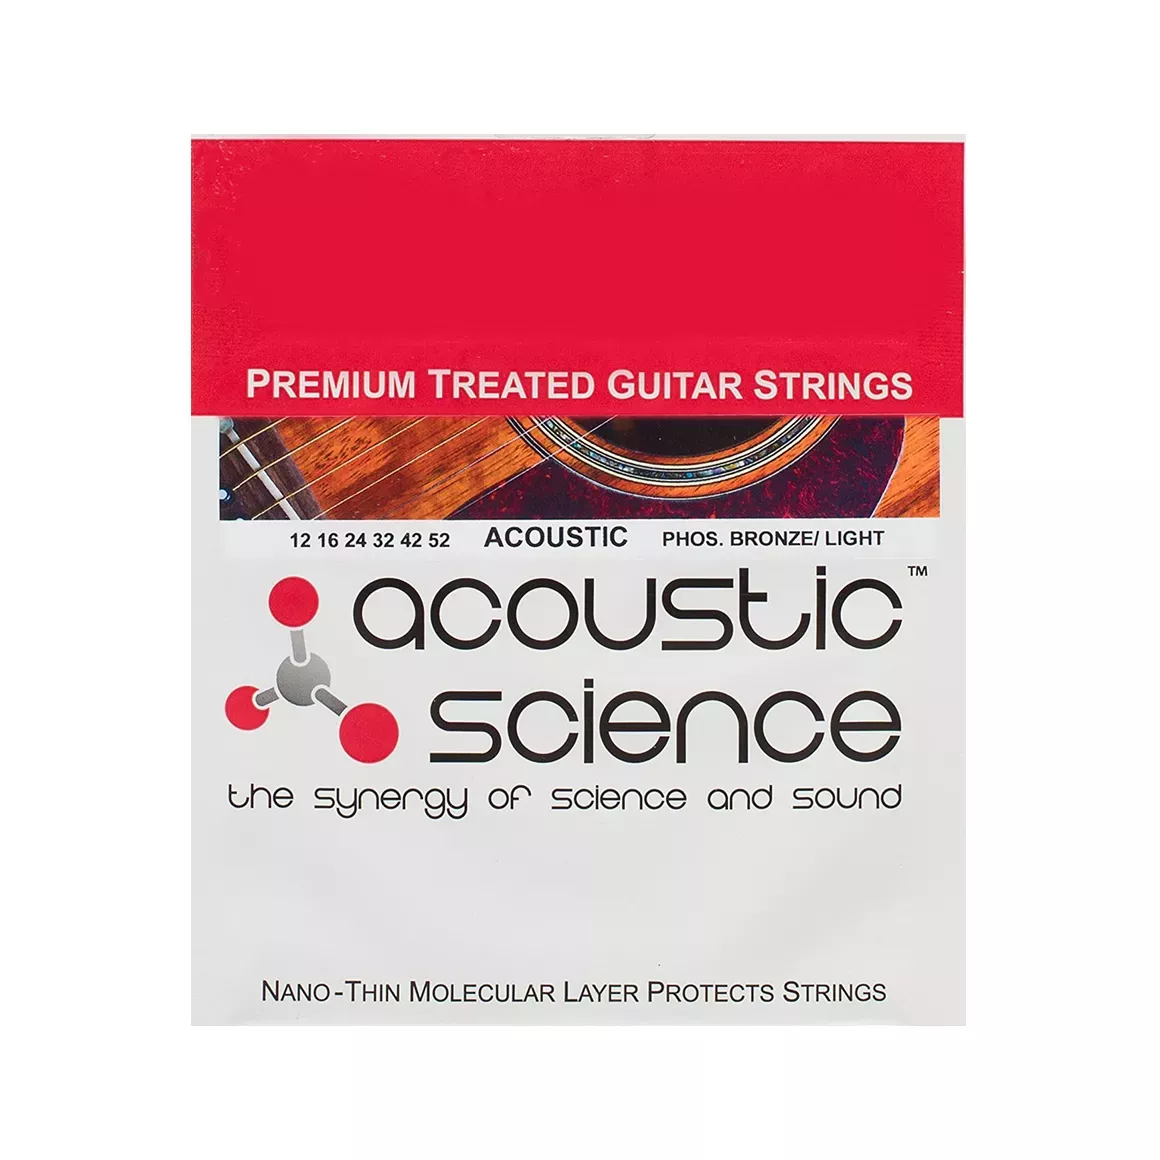 Acoustic Science 12 16 24 32 42 52 BRONZE Набор 6 струн для гитары Акустик